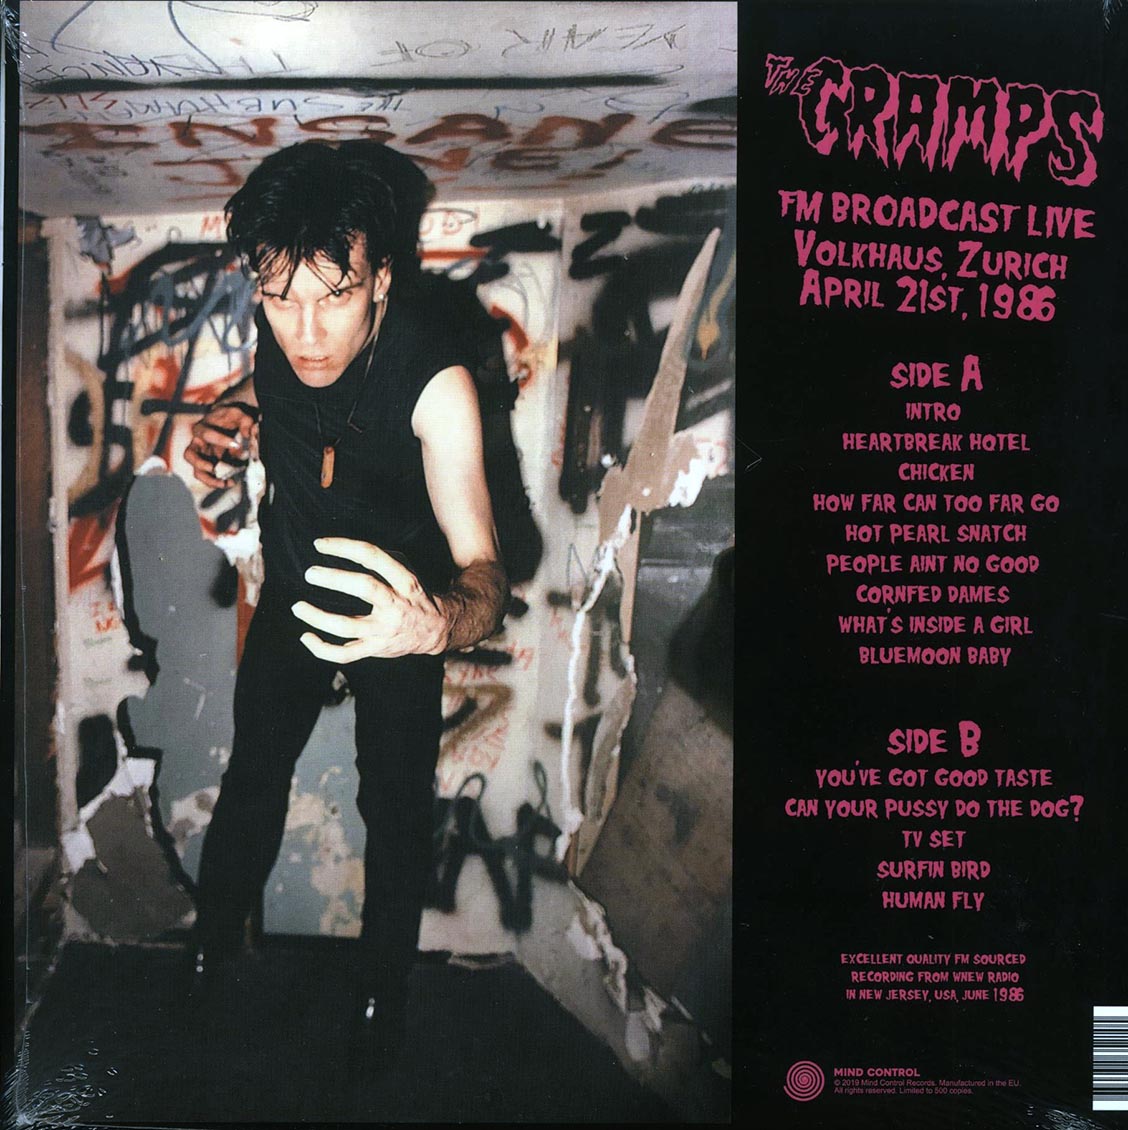 The Cramps - Hot Pearl Radio Broadcast: TV Broadcast Live Volkhaus, Zurich April 21st, 1986 - Vinyl LP, LP